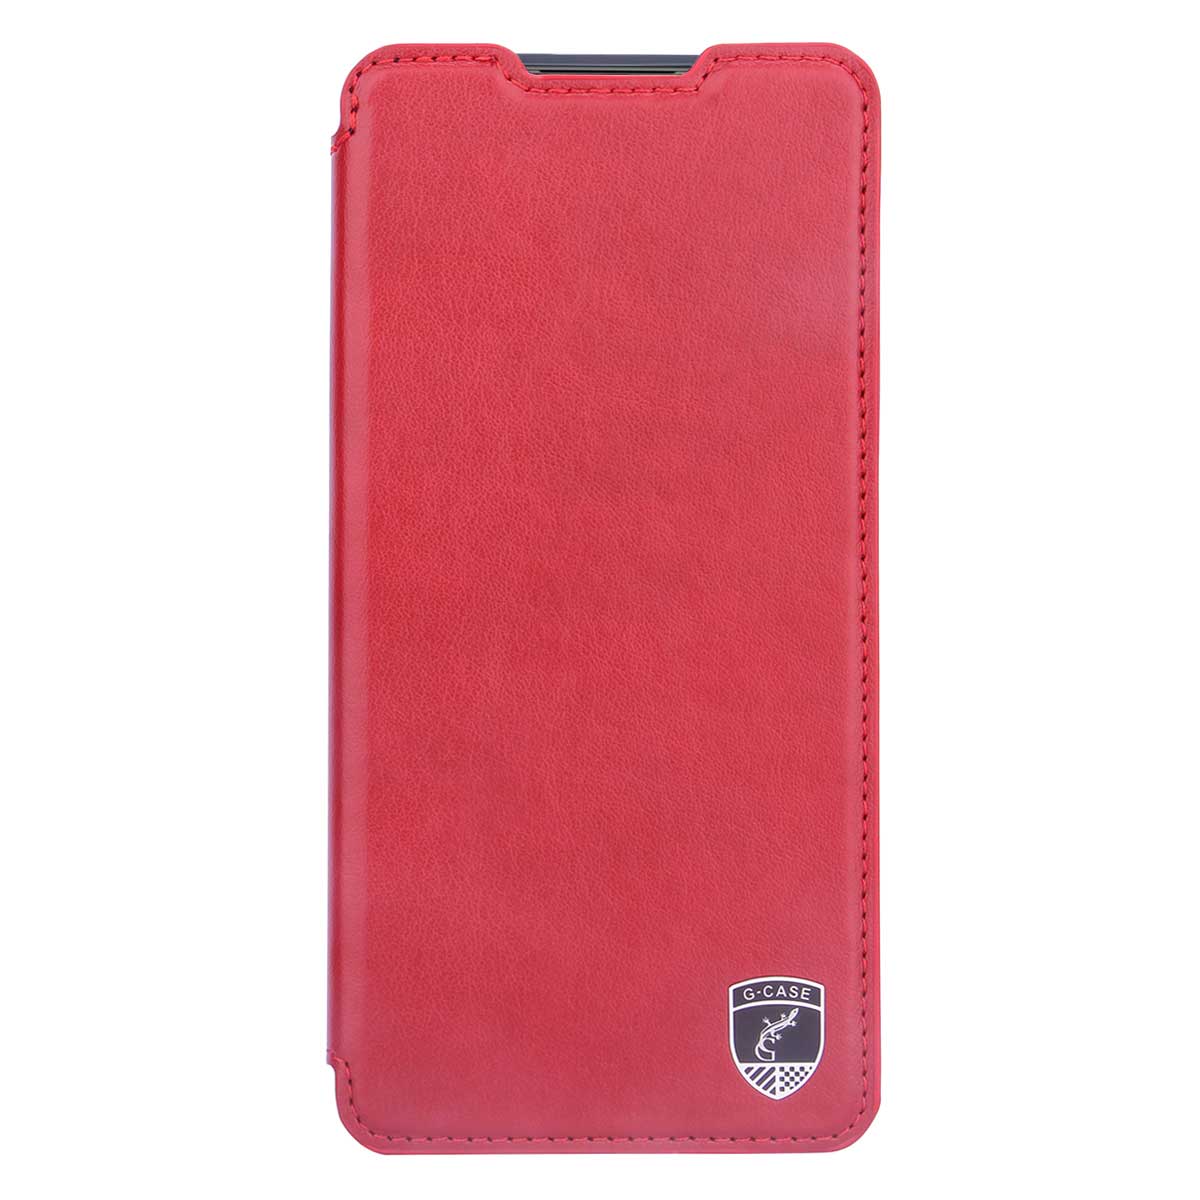 Чехол G-Case для Samsung Galaxy A72 SM-A725F Slim Premium Red GG-1358 чехол g case для samsung galaxy a72 sm a725f silicone red gg 1384